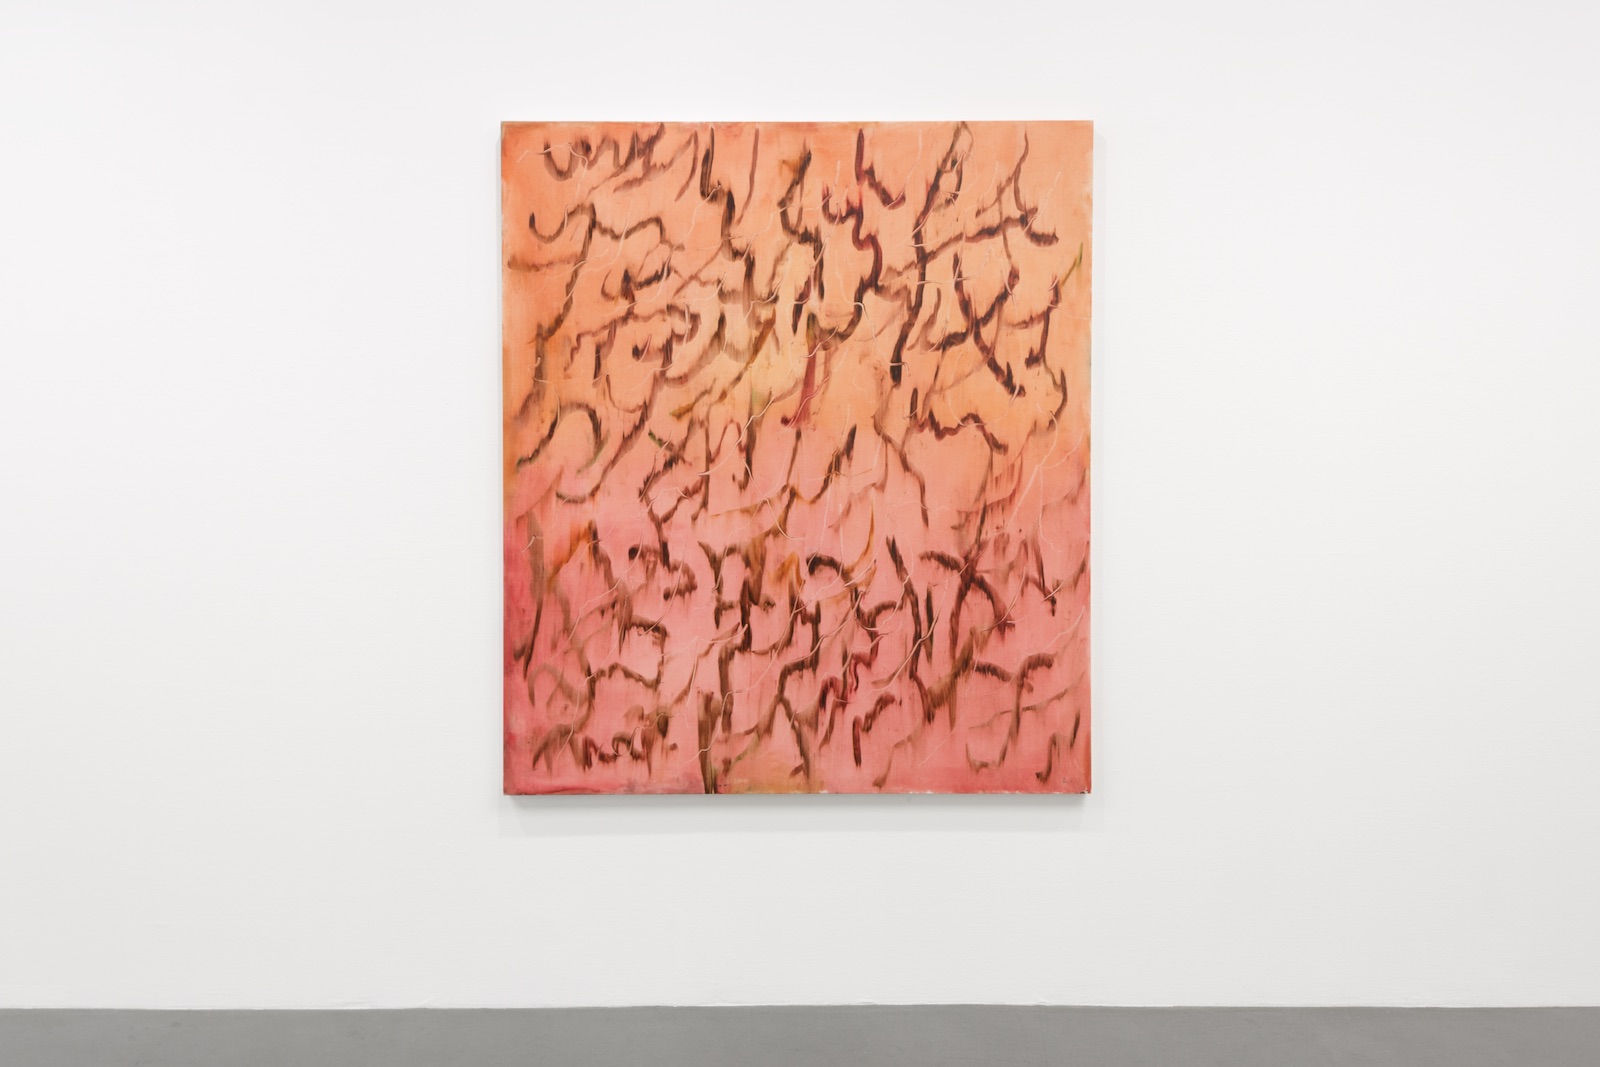 Sticks, 2017, oil on canvas, 160 x 140 cm
